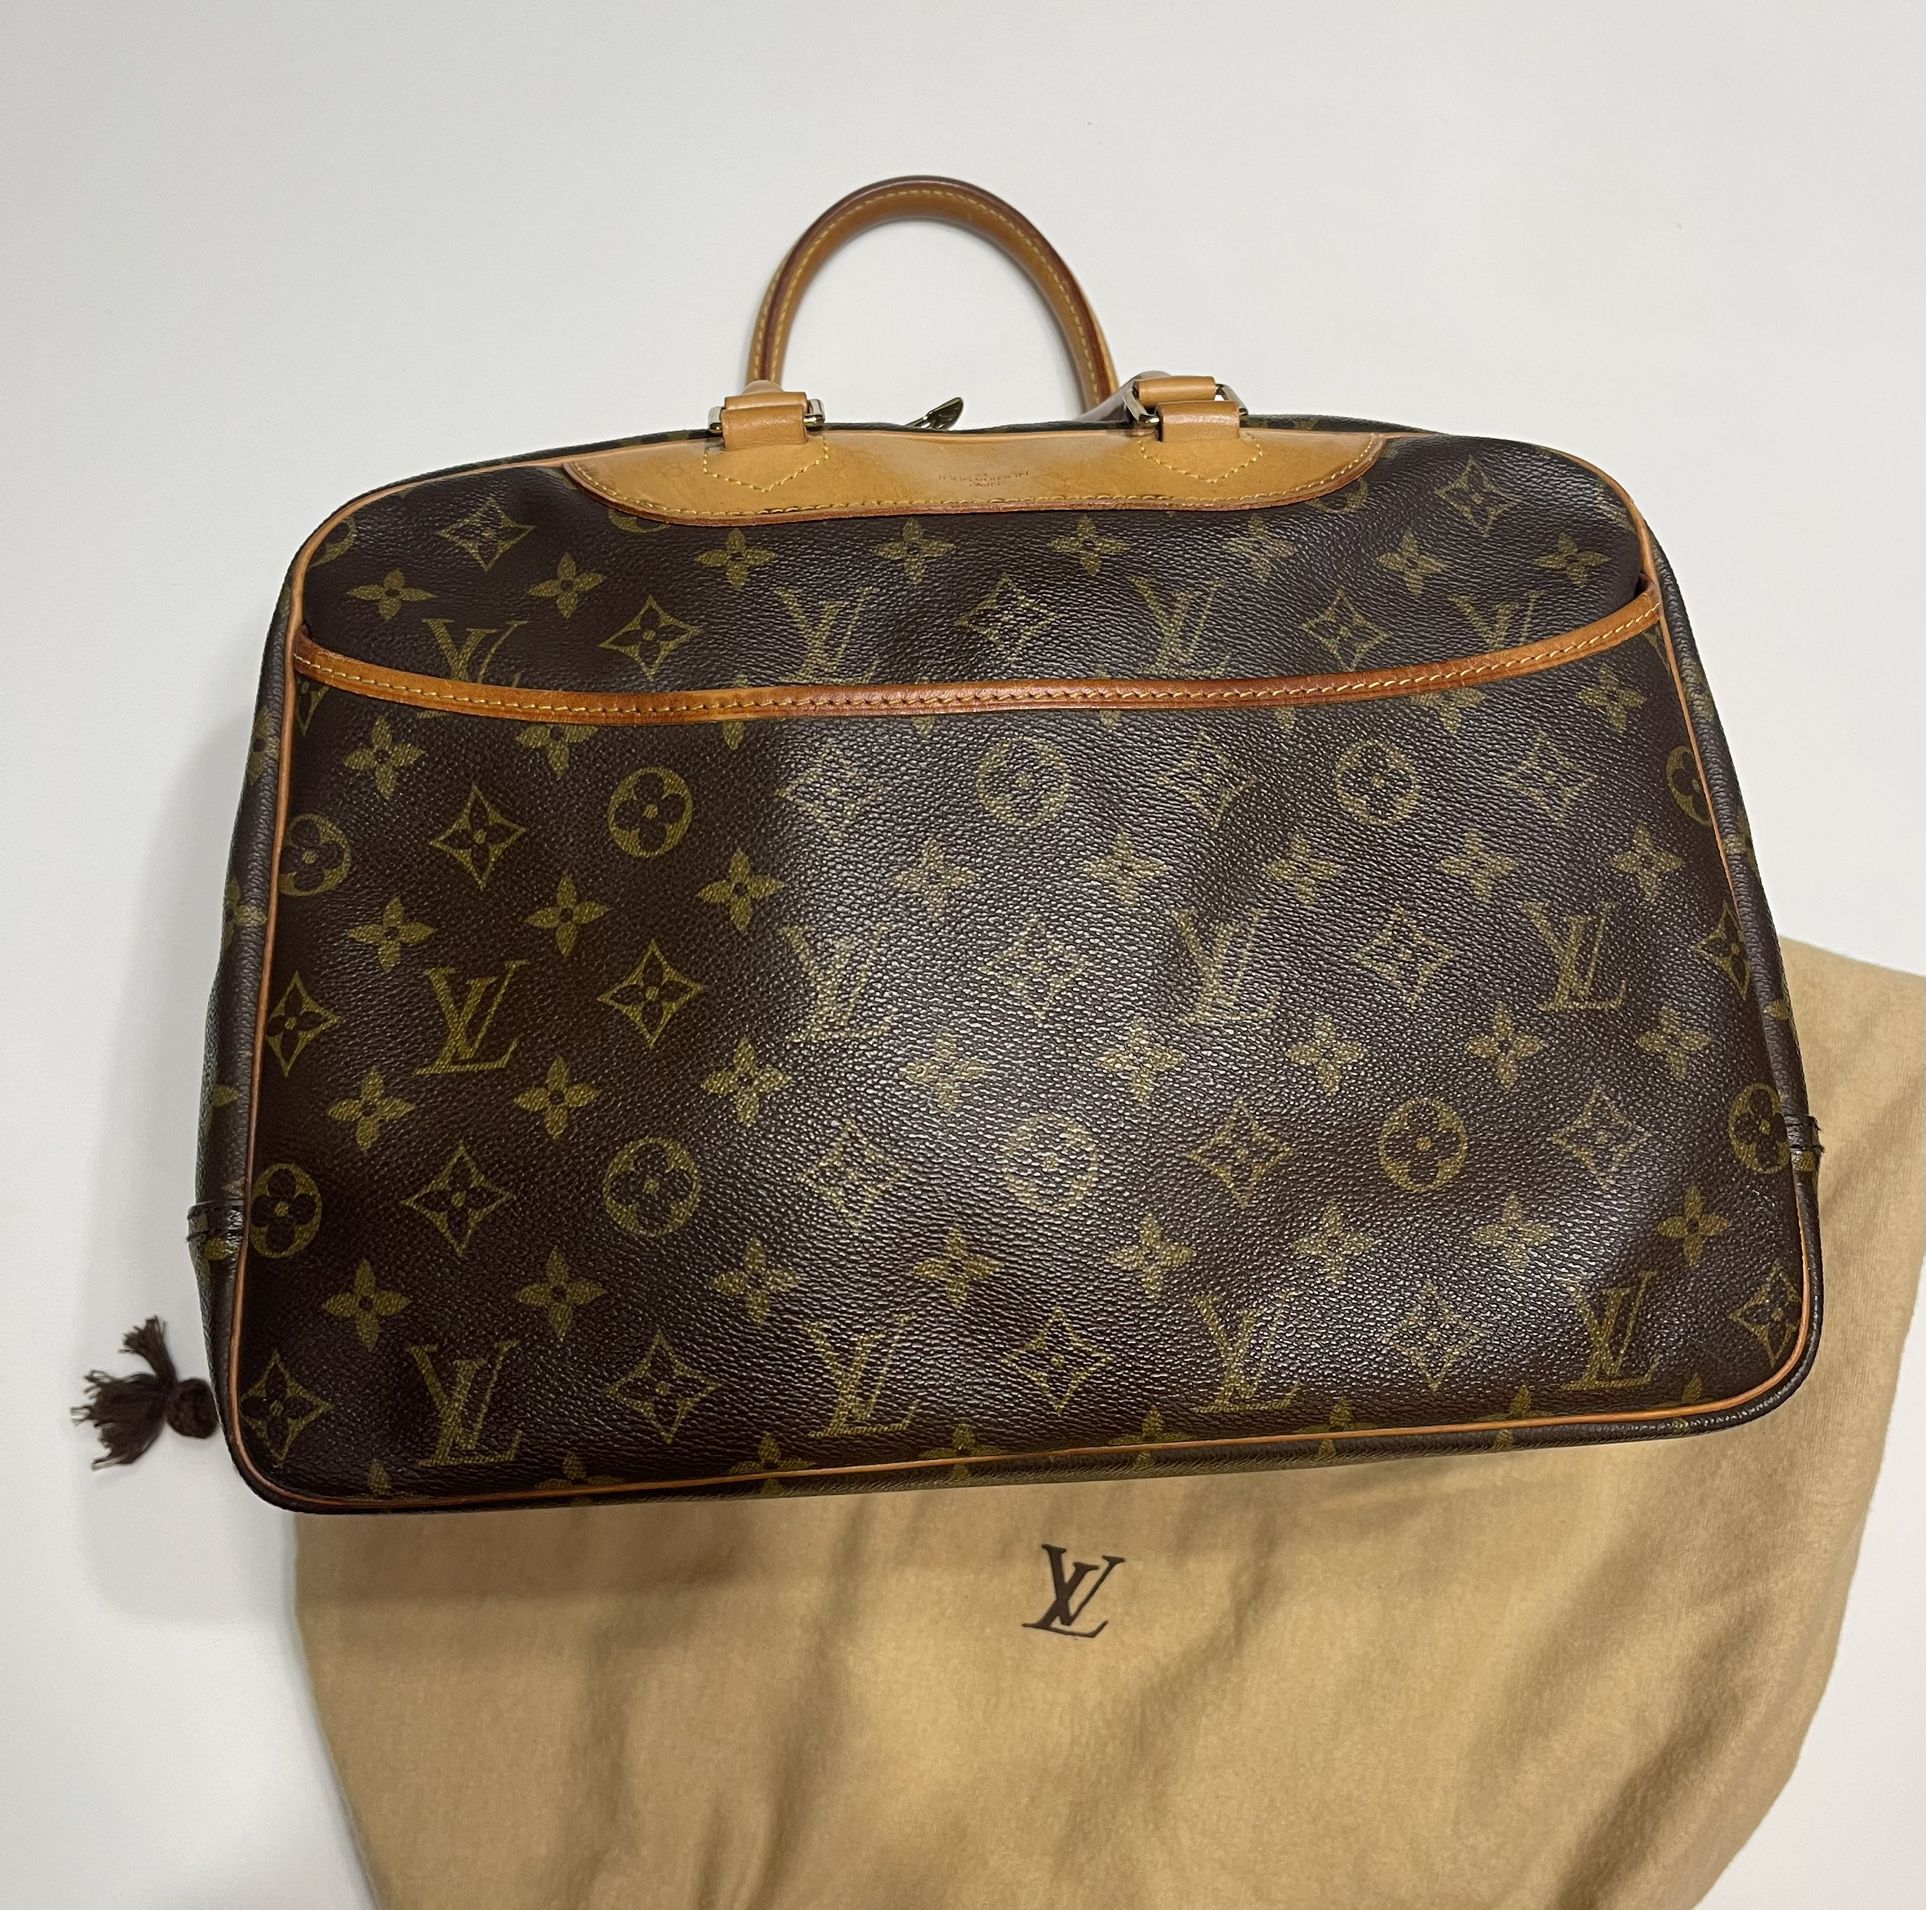 Louis Vuitton Deauville Monogram Bag for Sale in San Diego, CA - OfferUp